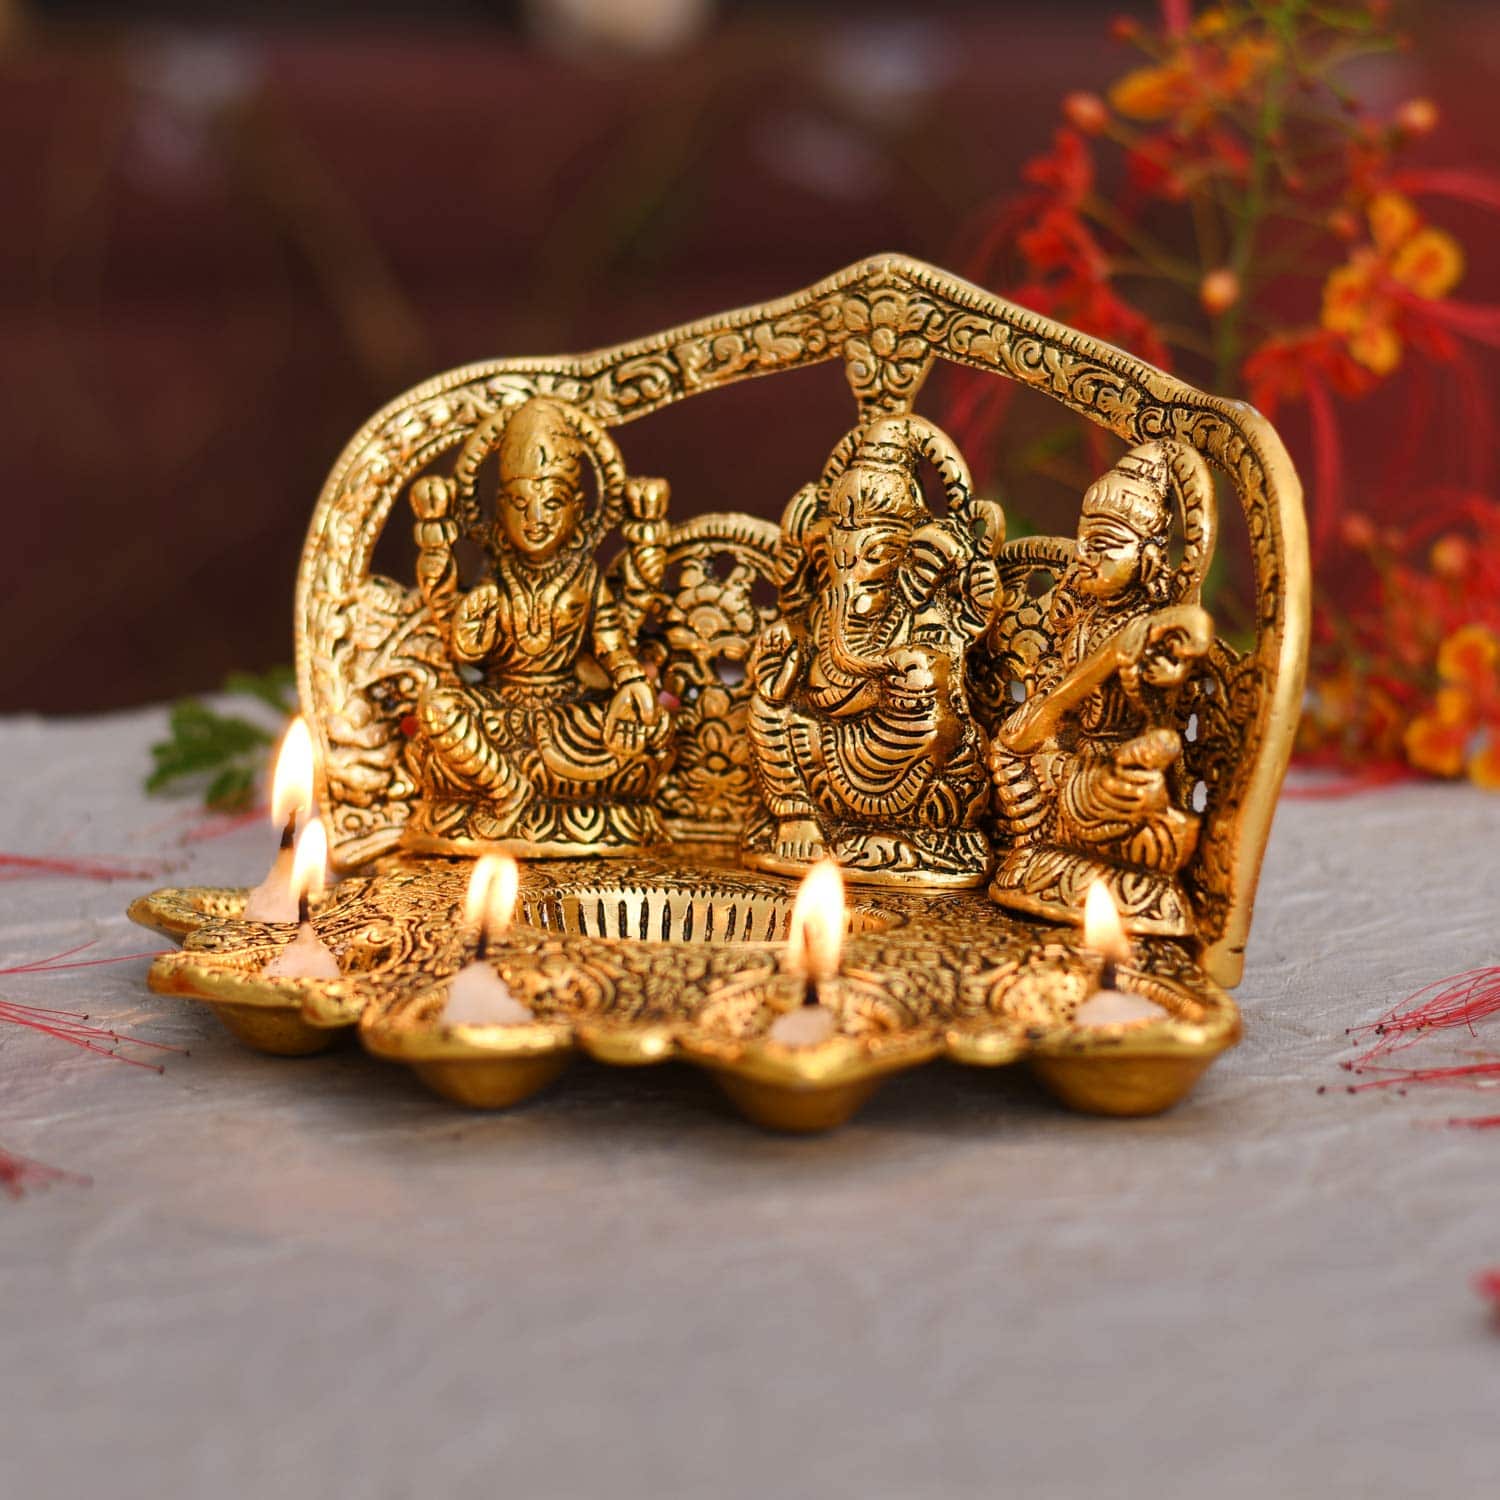 Collectable India Lakshmi Ganesh Saraswati Idol Diya Oil Lamp Deepak - Metal Lakshmi Ganesh Showpiece Statue - Traditional Diya for Diwali Pooja - Diwali Home Decor Item Gift (1) - YuvaFlowers